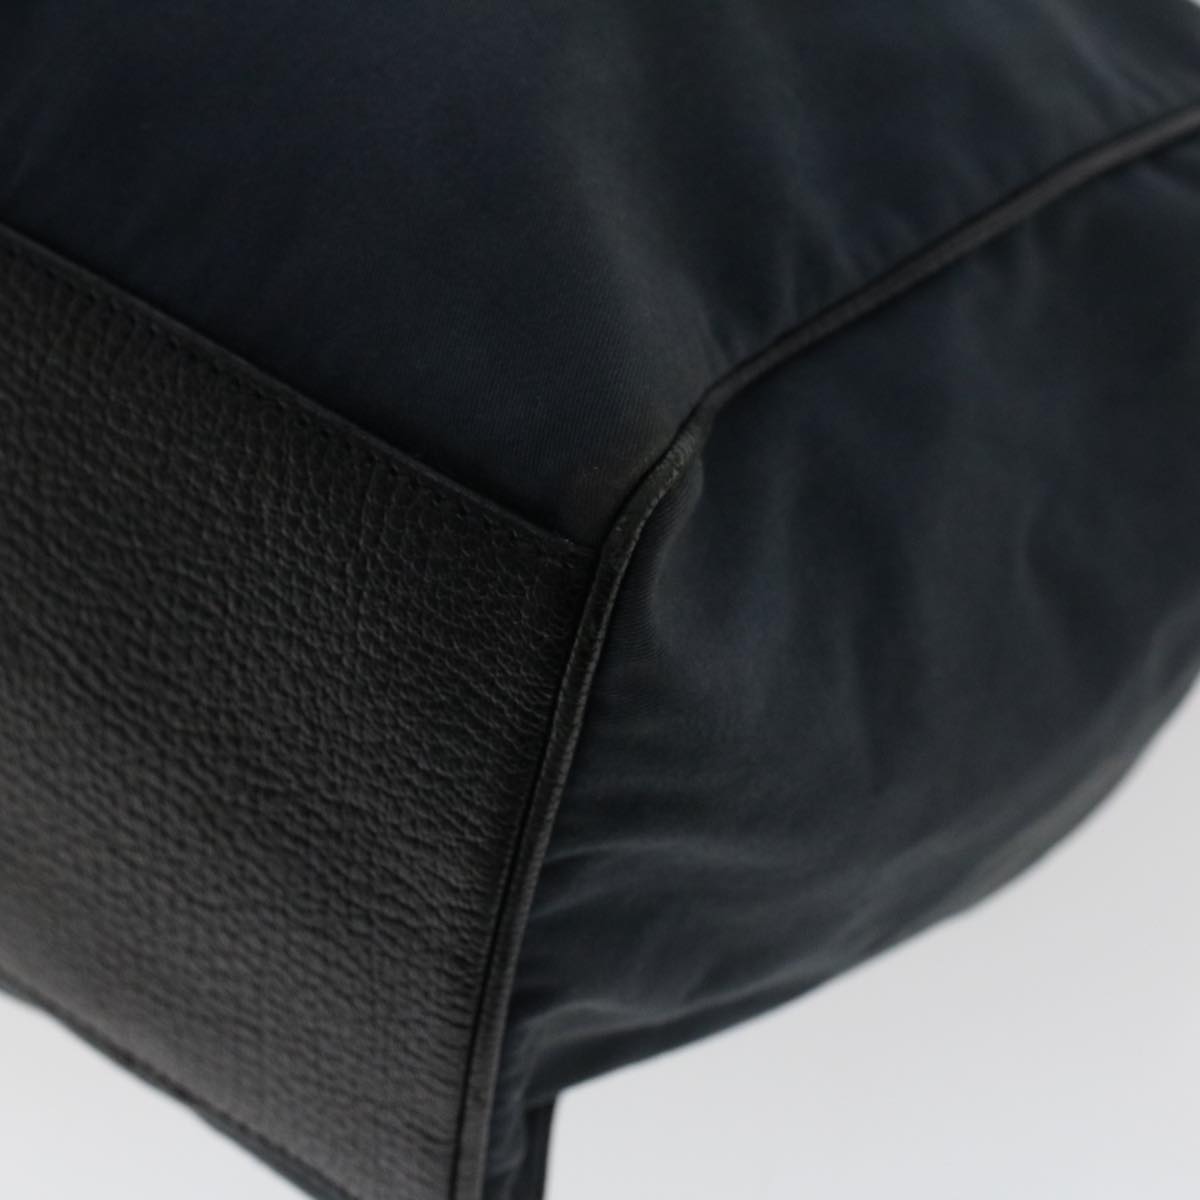 PRADA Tote Bag Canvas Leather Black Auth bs6724